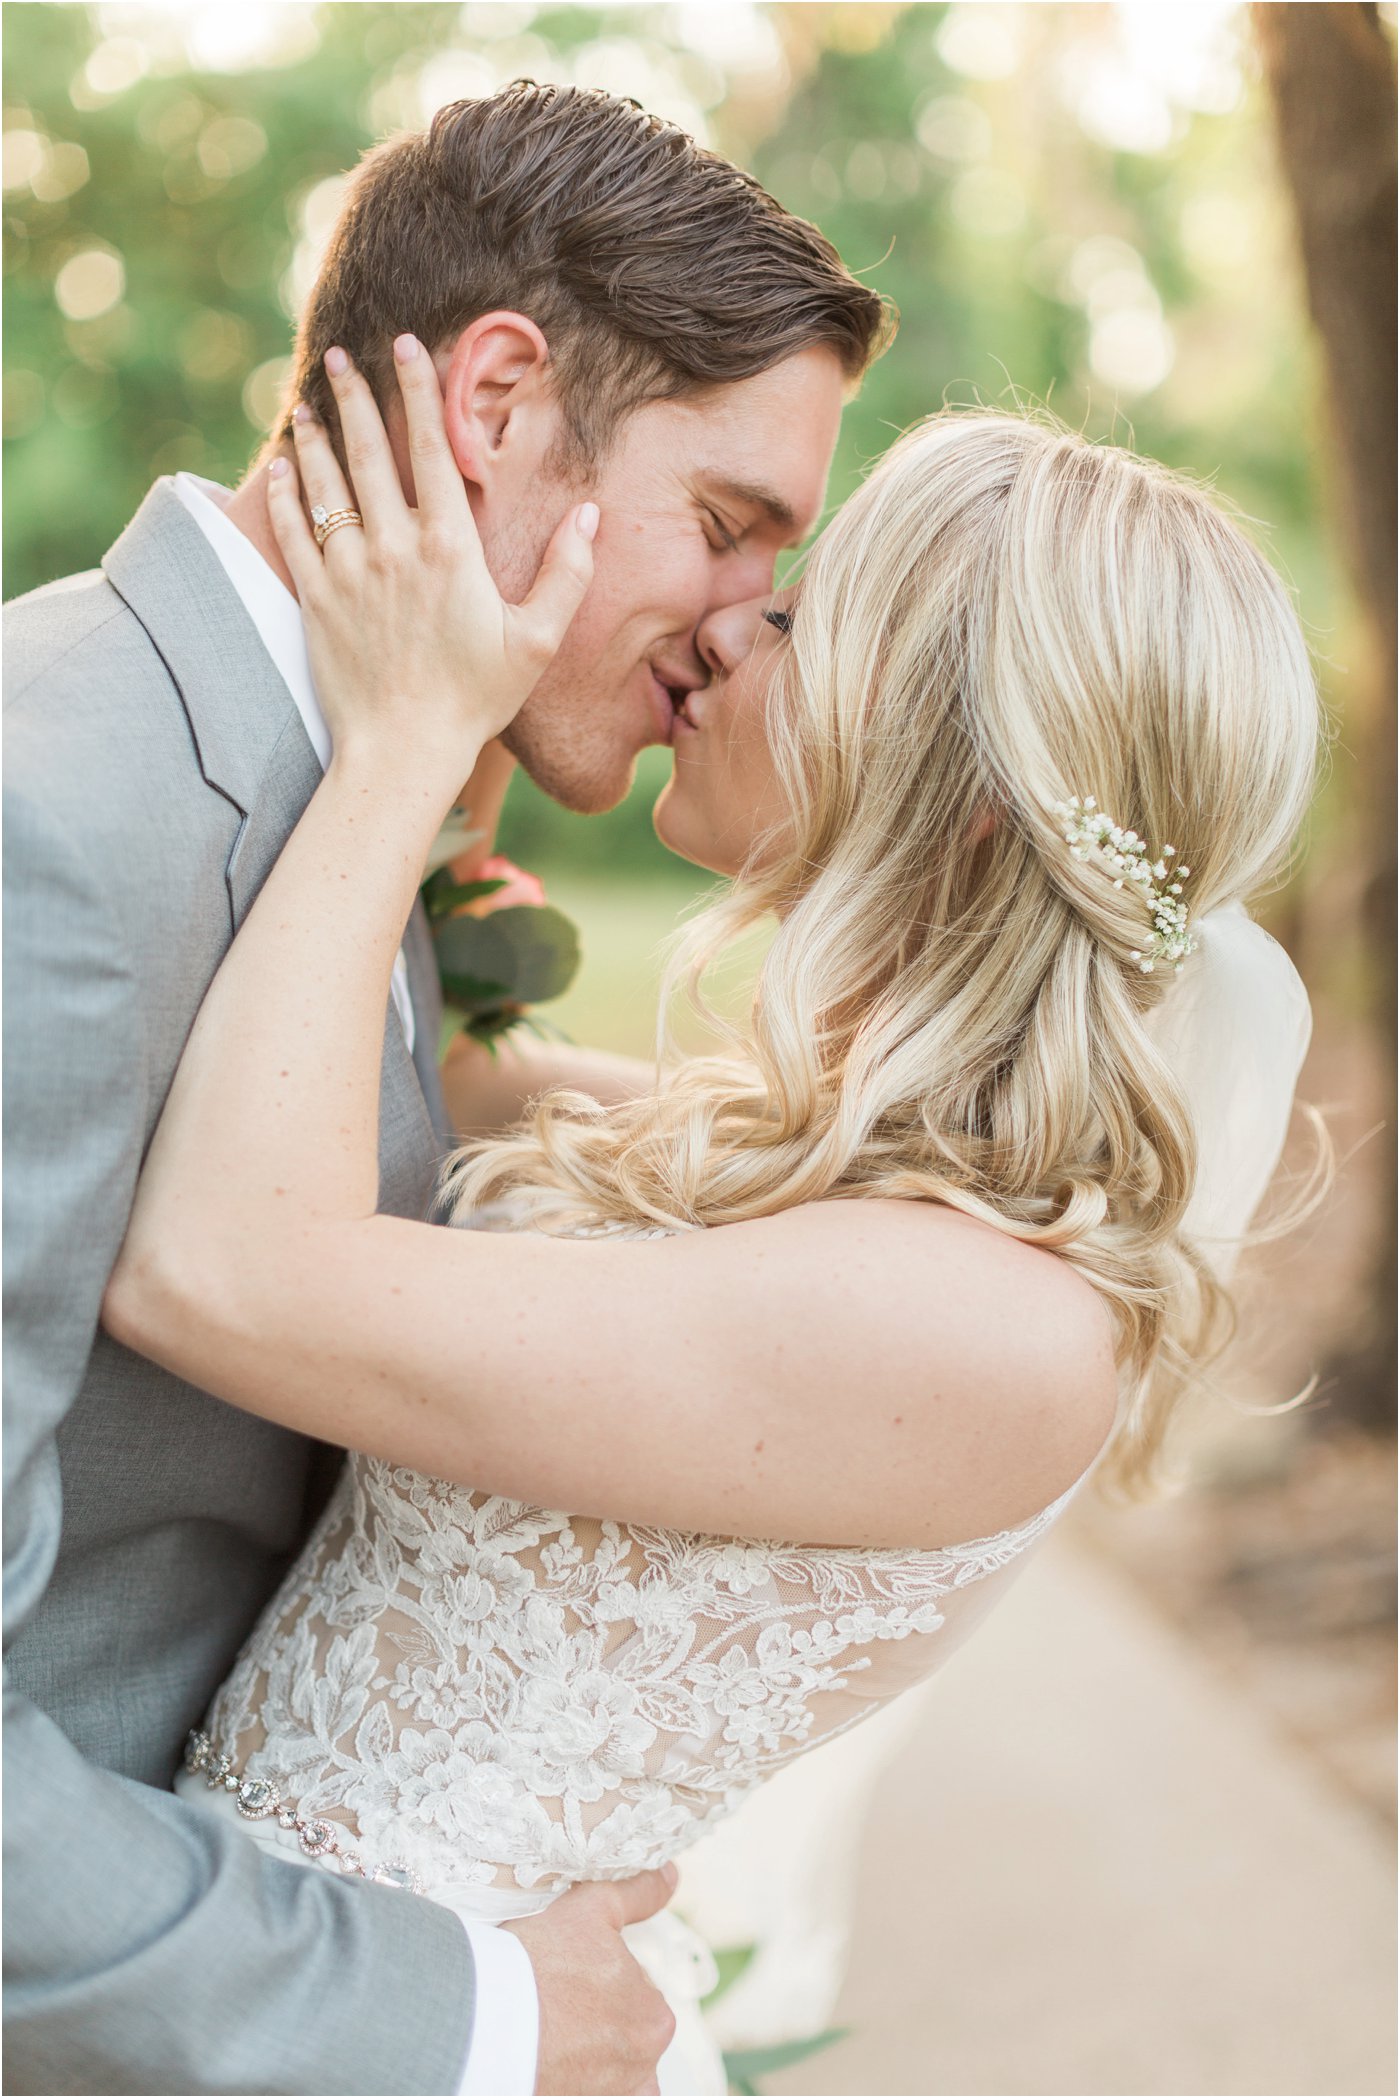 pandemic love story, intimate backyard wedding